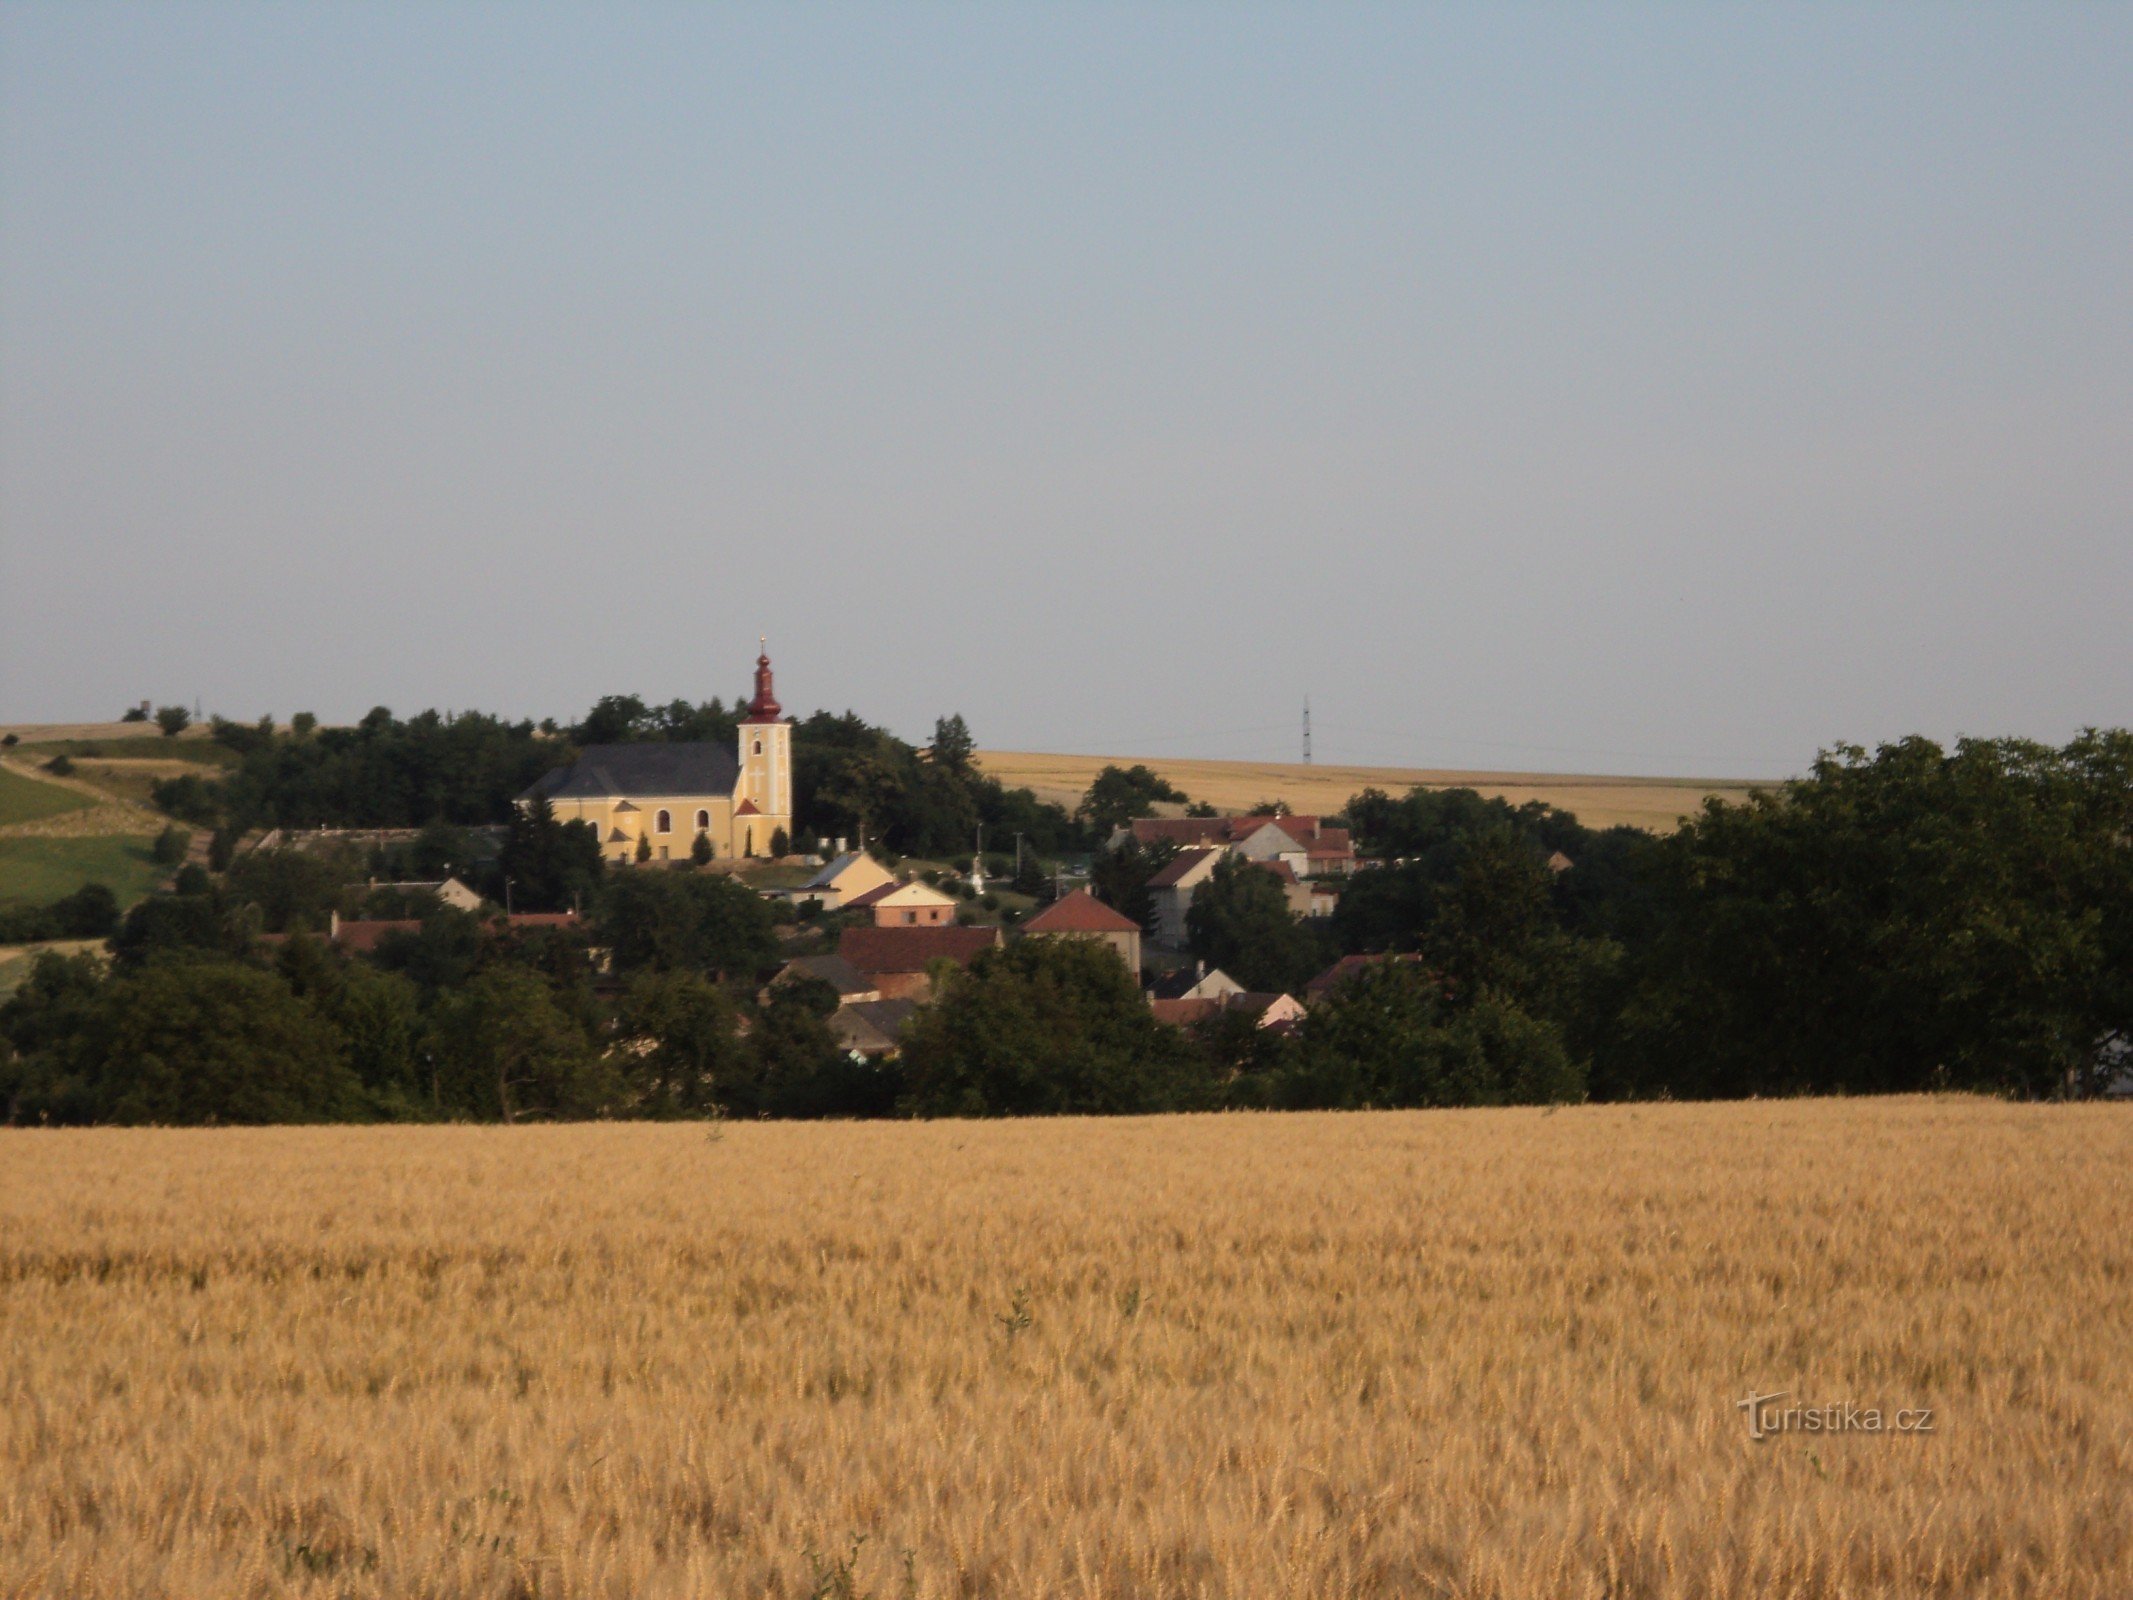 View of Kučerov